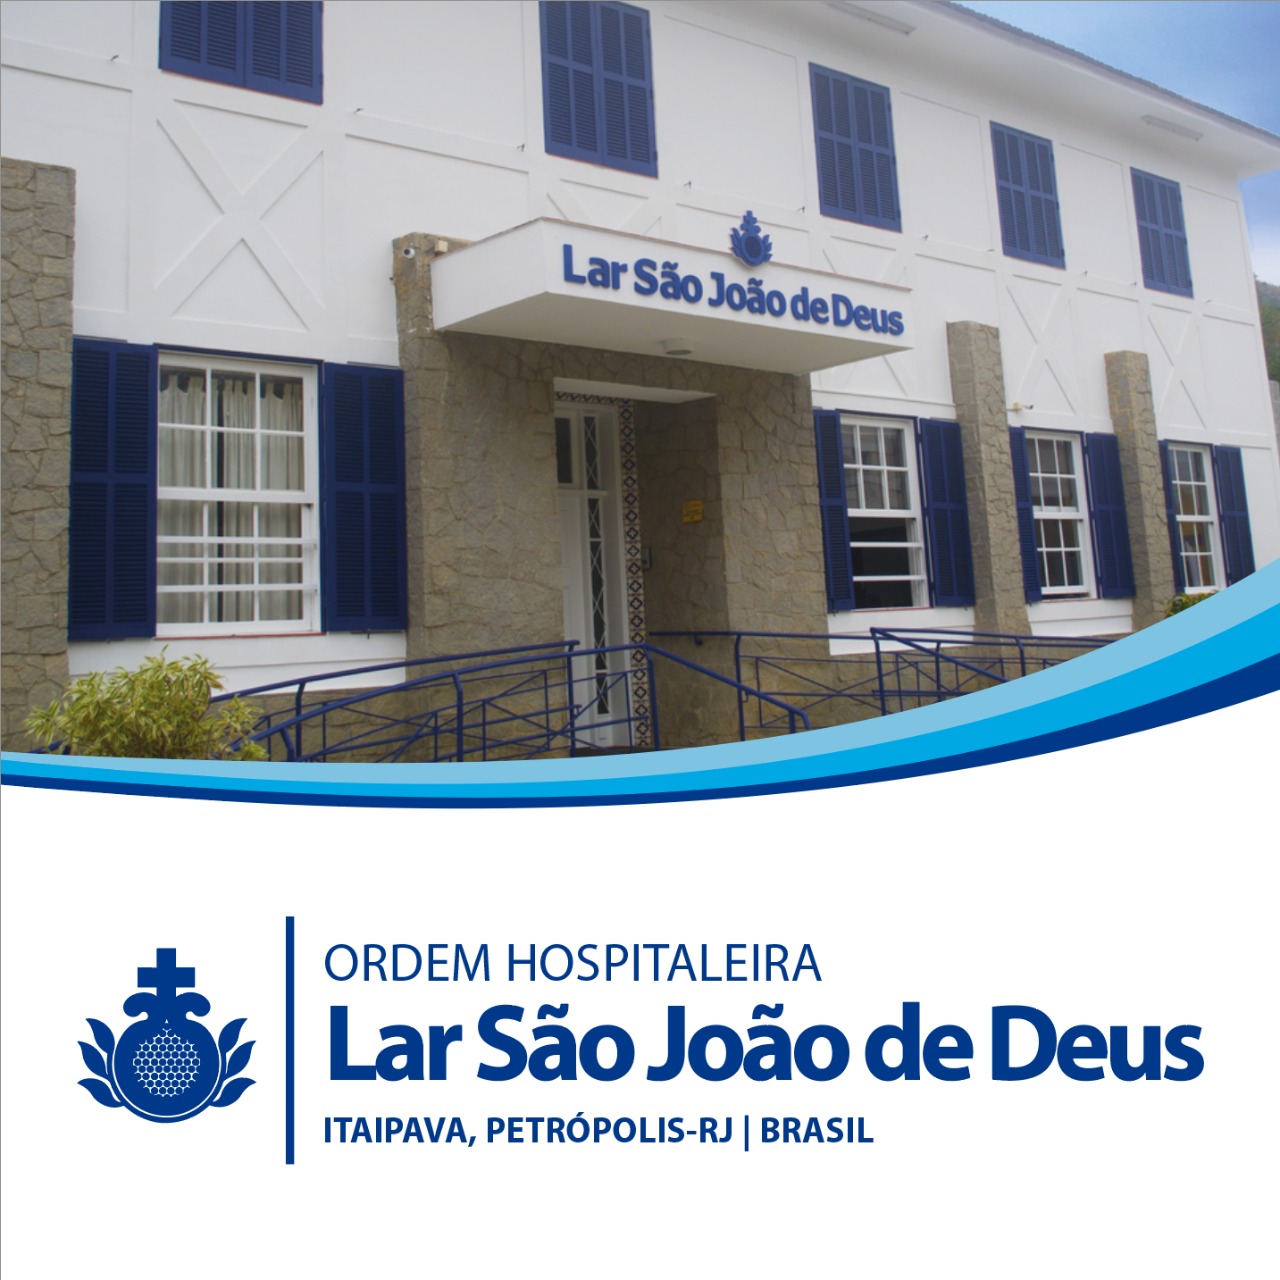 Centro Brasil Ordem Hospitaleria Lar Sao Joao de Deus | Orden Hospitalaria San Juan de Dios